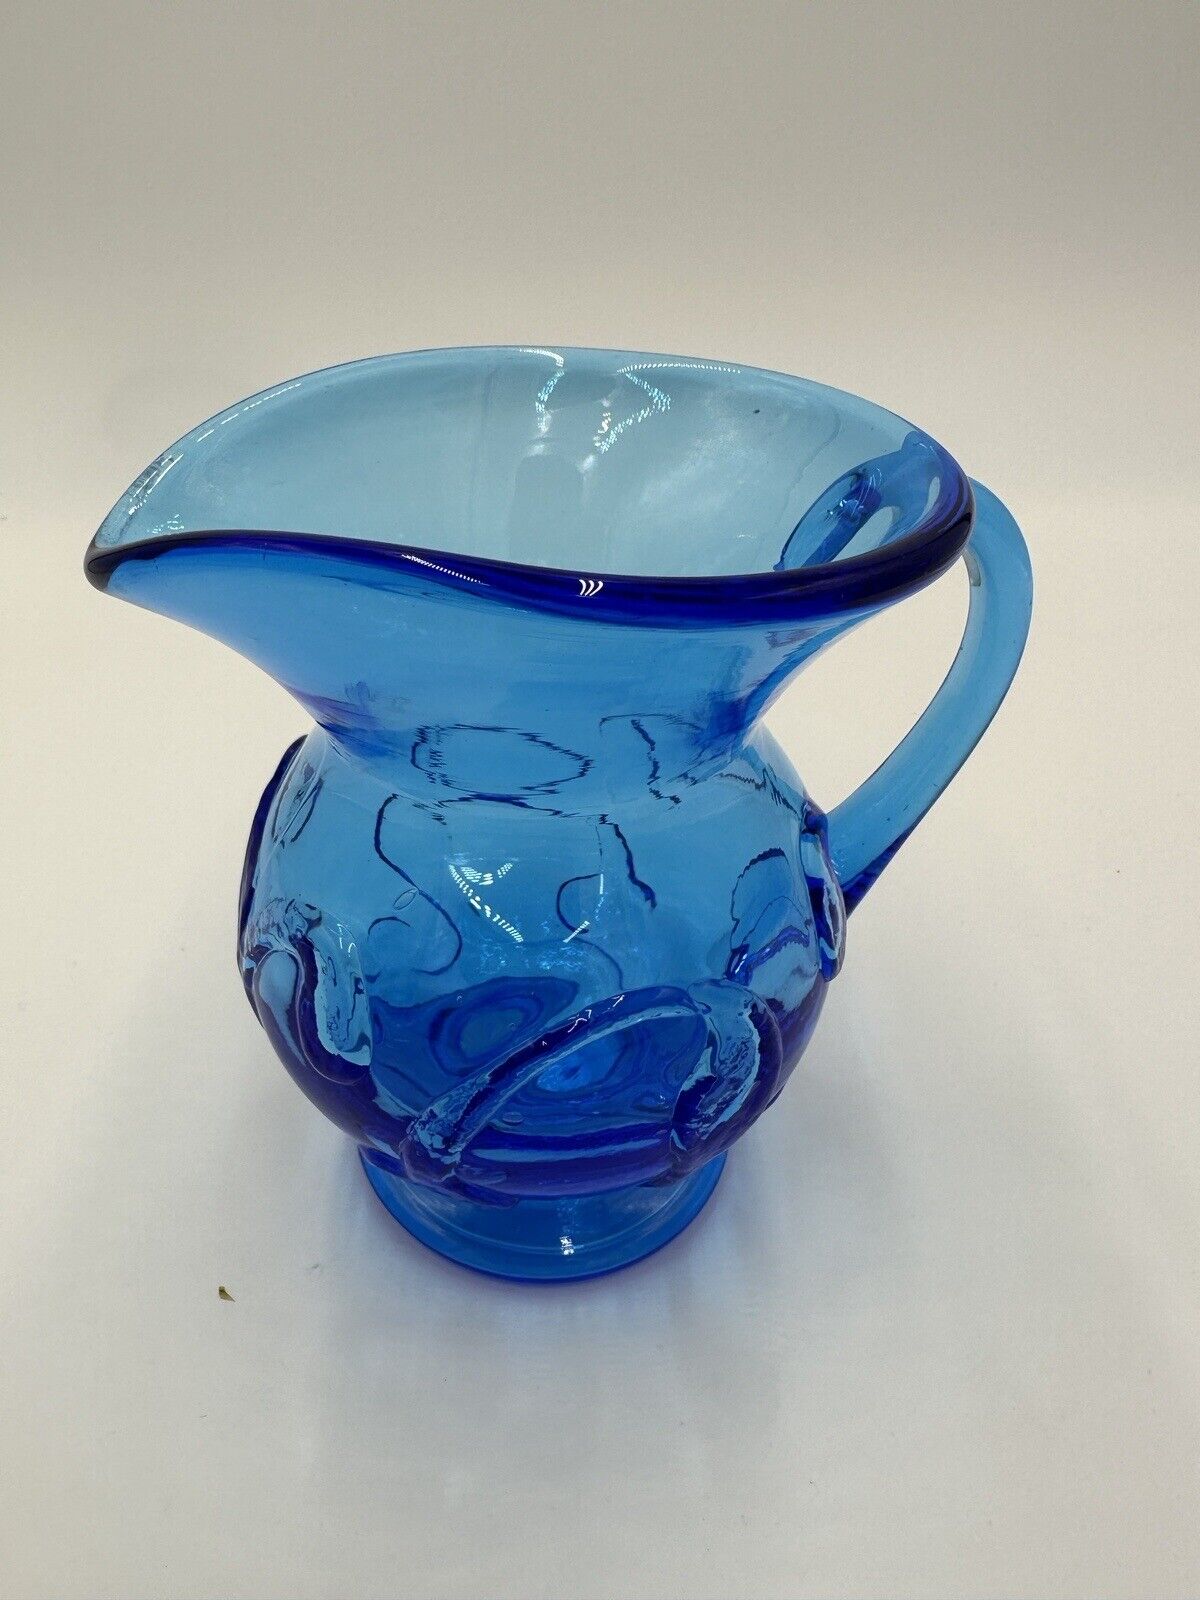 Pitcher Art Glass Hand Blown Electric Blue Floral Pressed Handled Decor Vintage